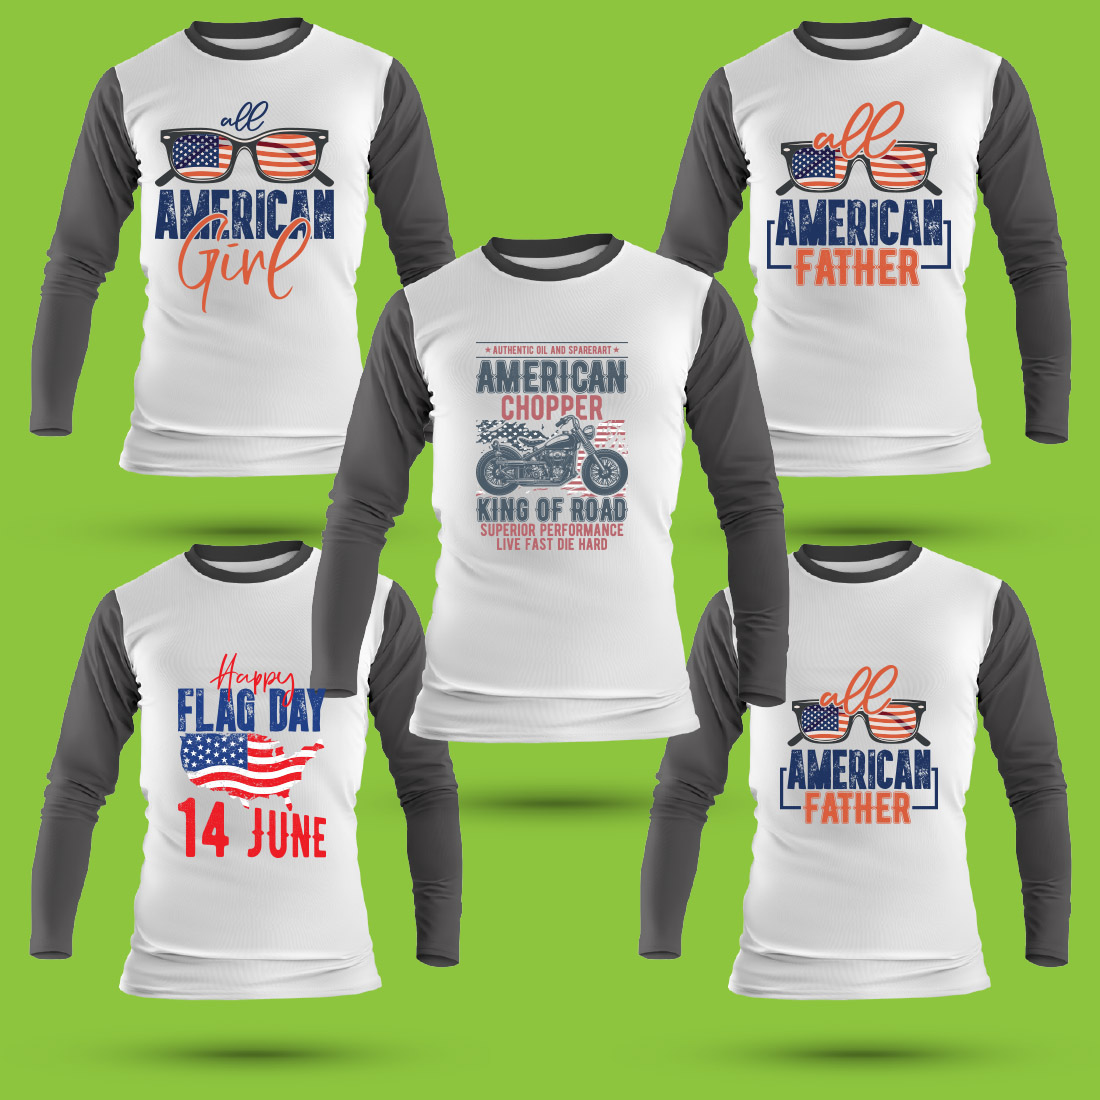 American flag T Shirt Designs Bundle cover image.